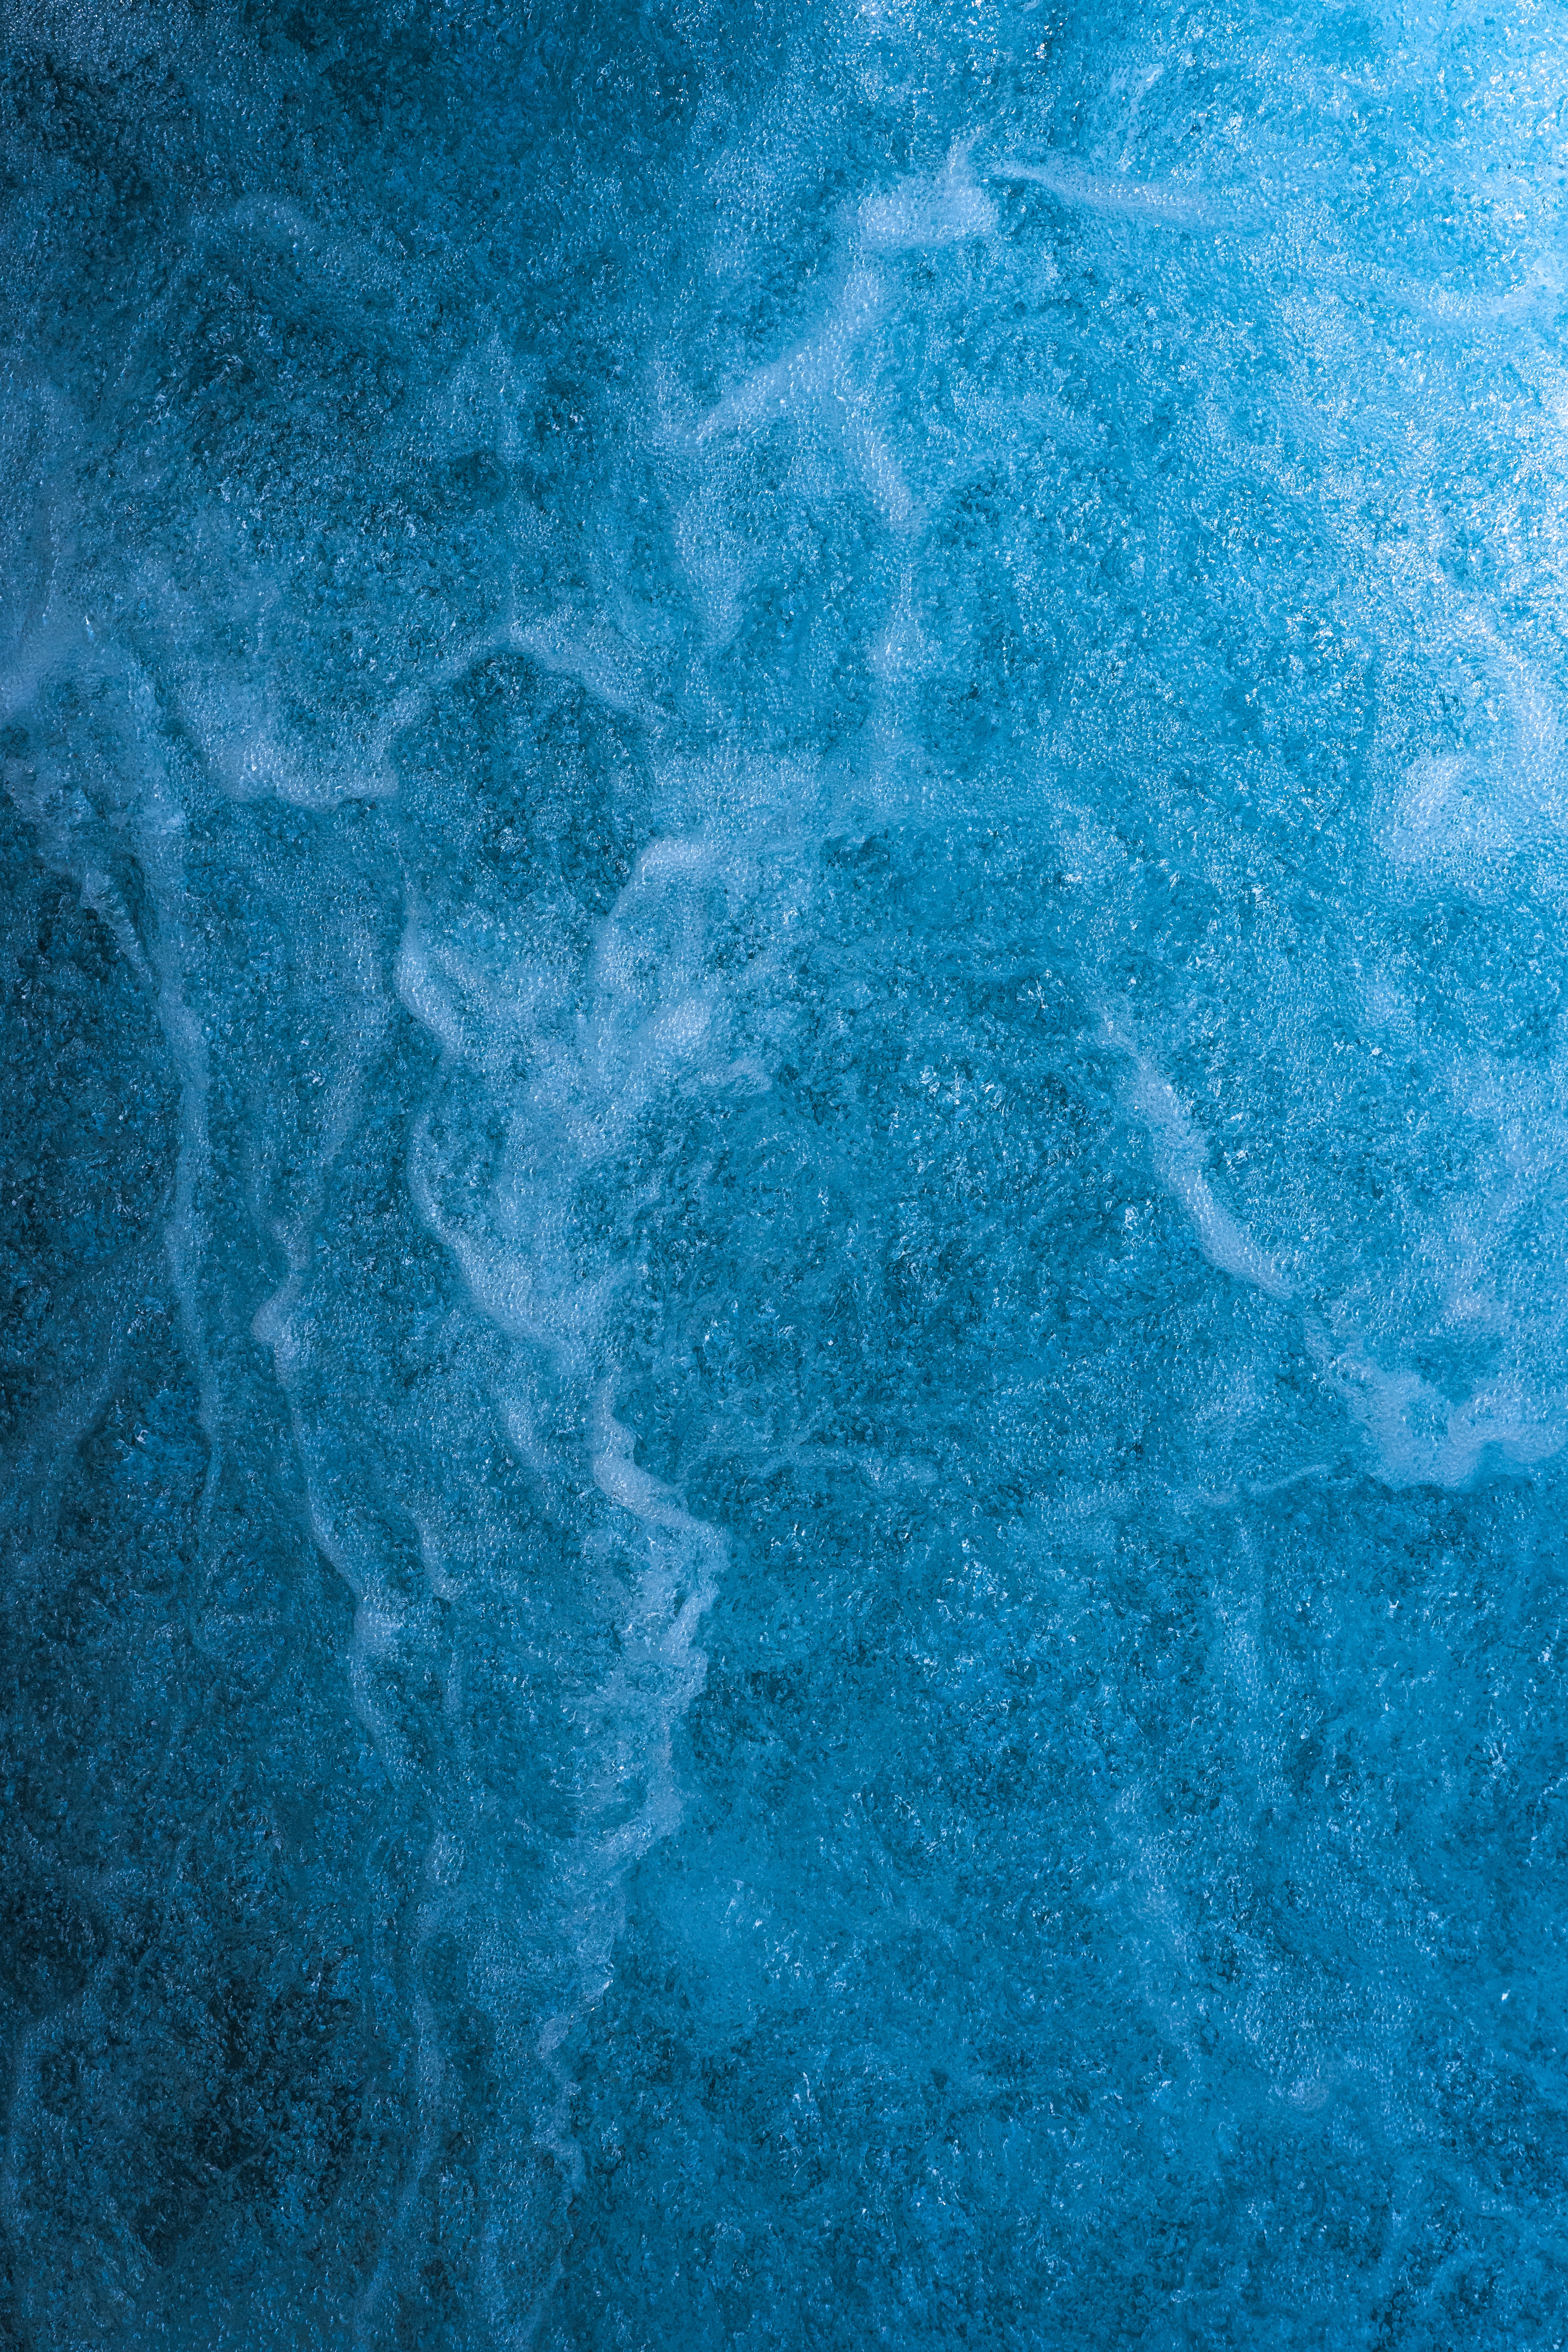 textures, texture, water, waves, blue, liquid